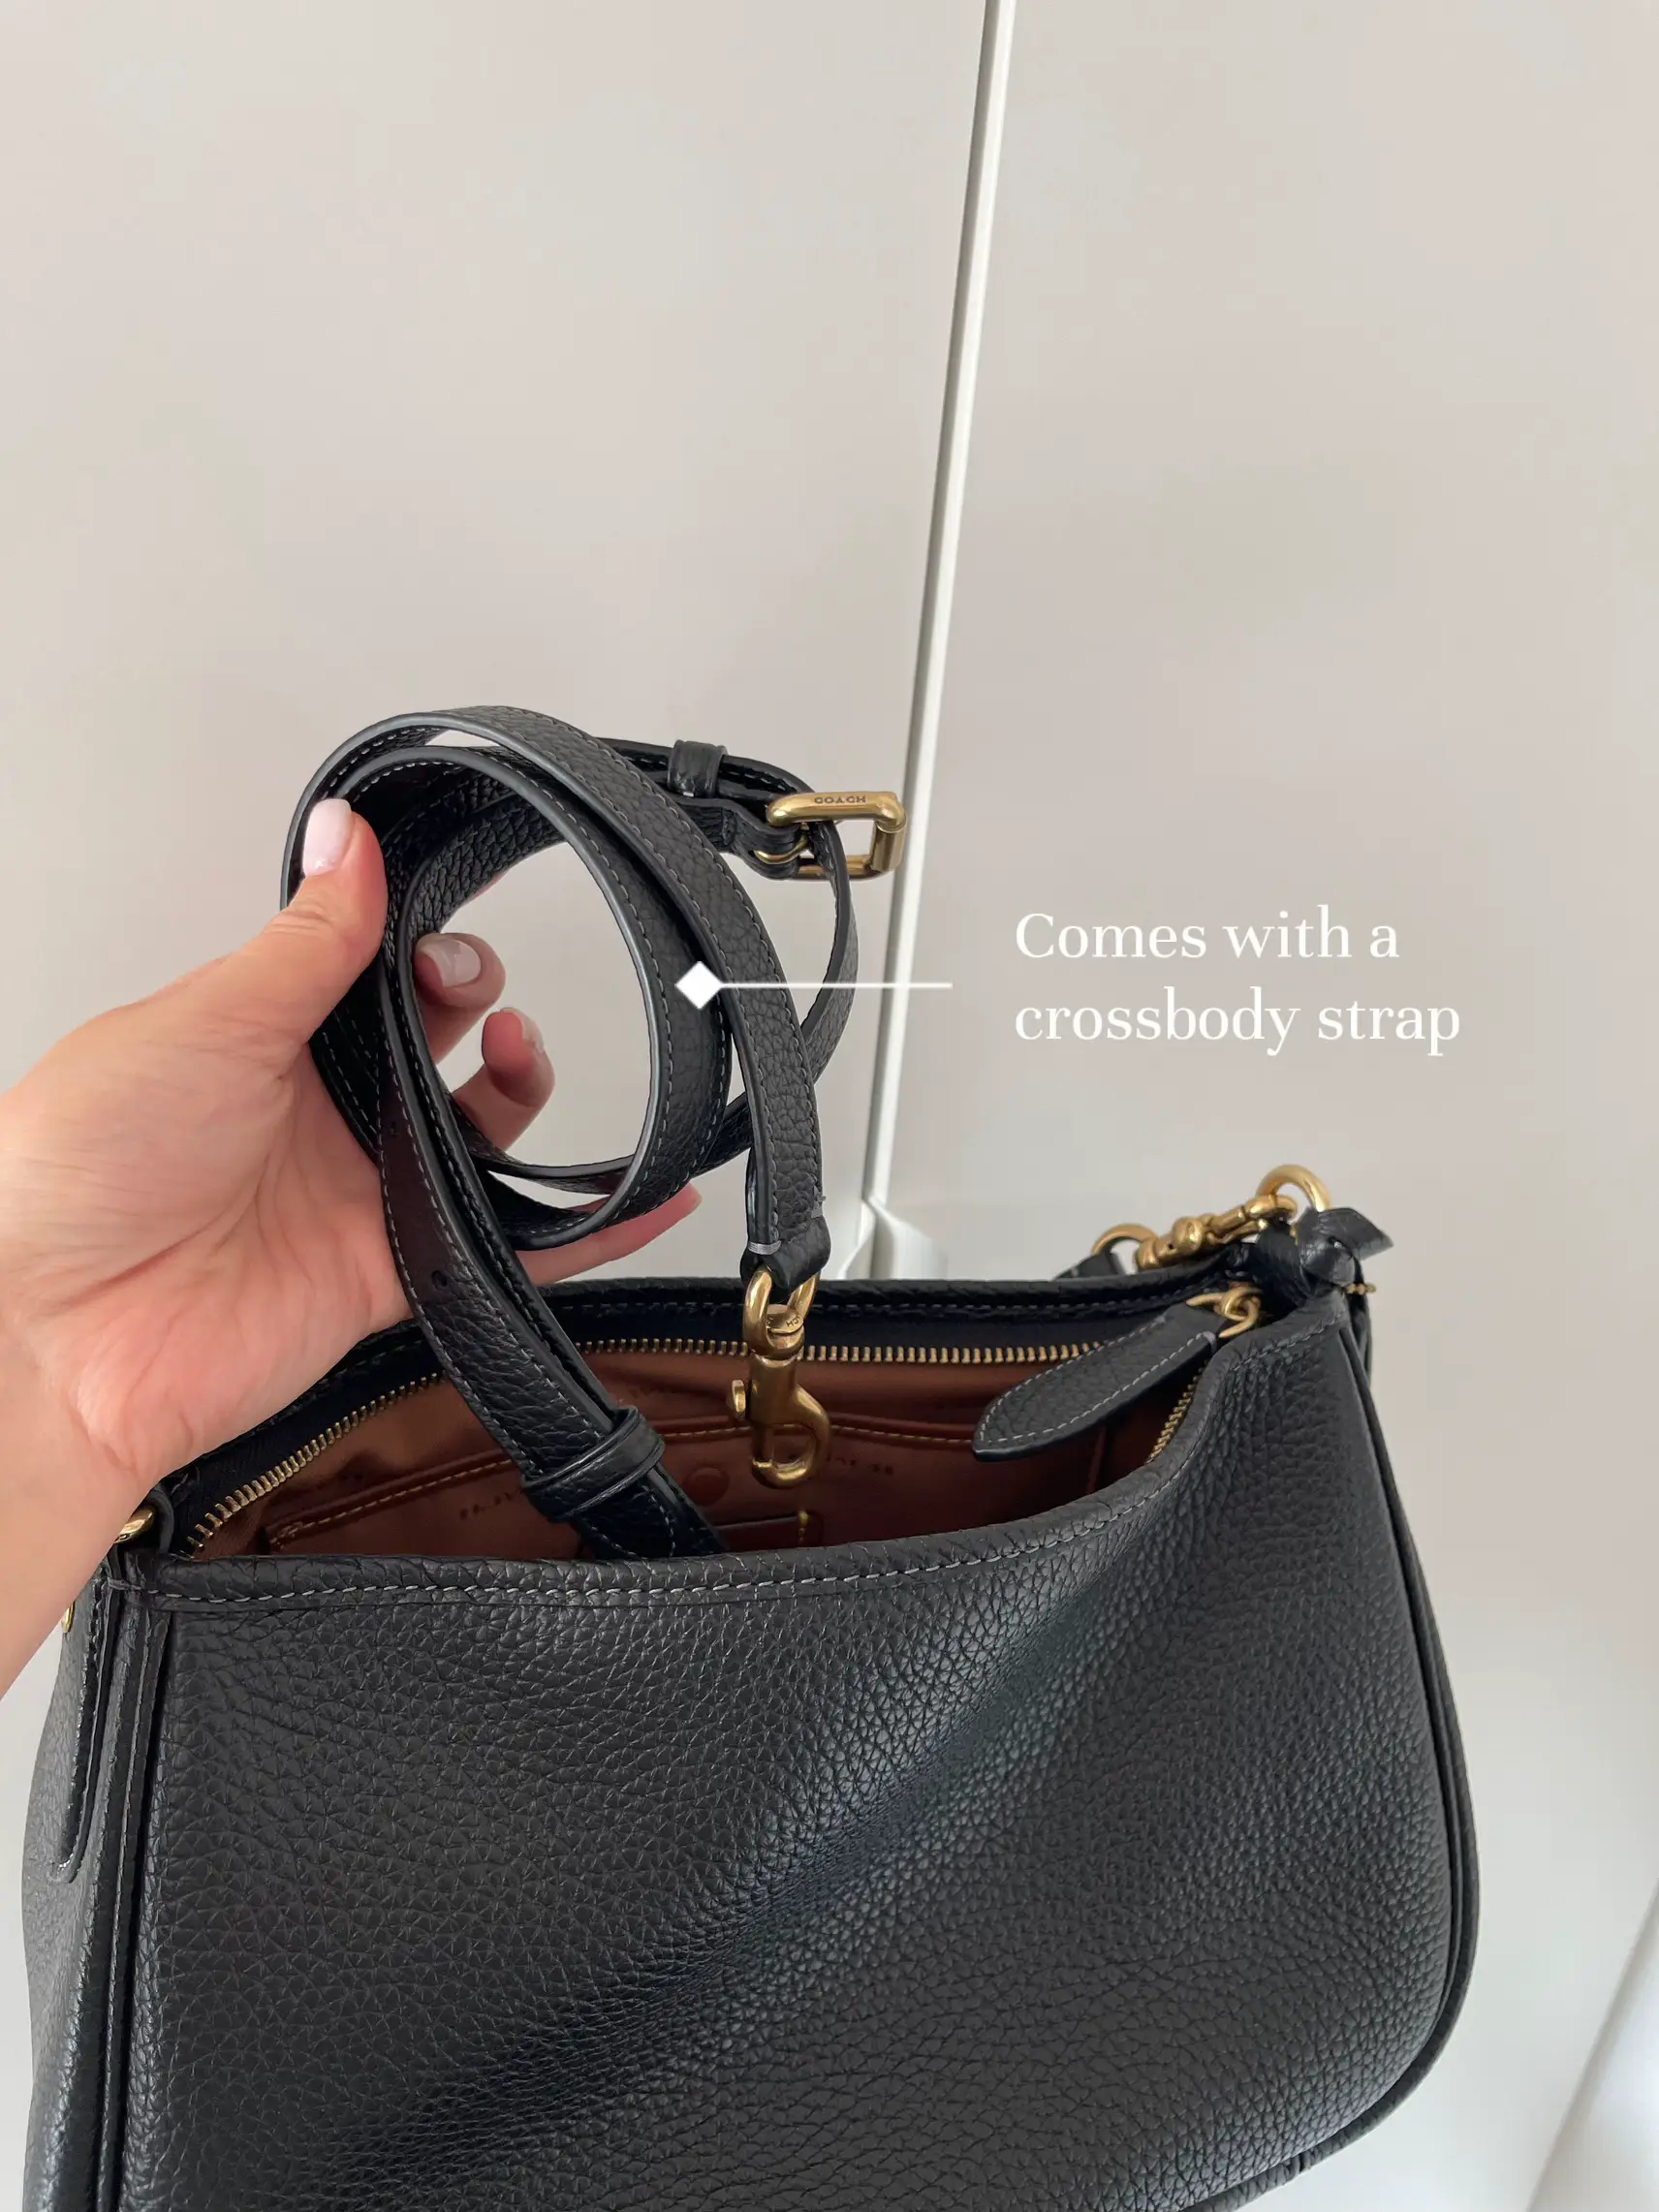 COACH Soft Pebble Leather Cary Crossbody  Green One Size: Handbags